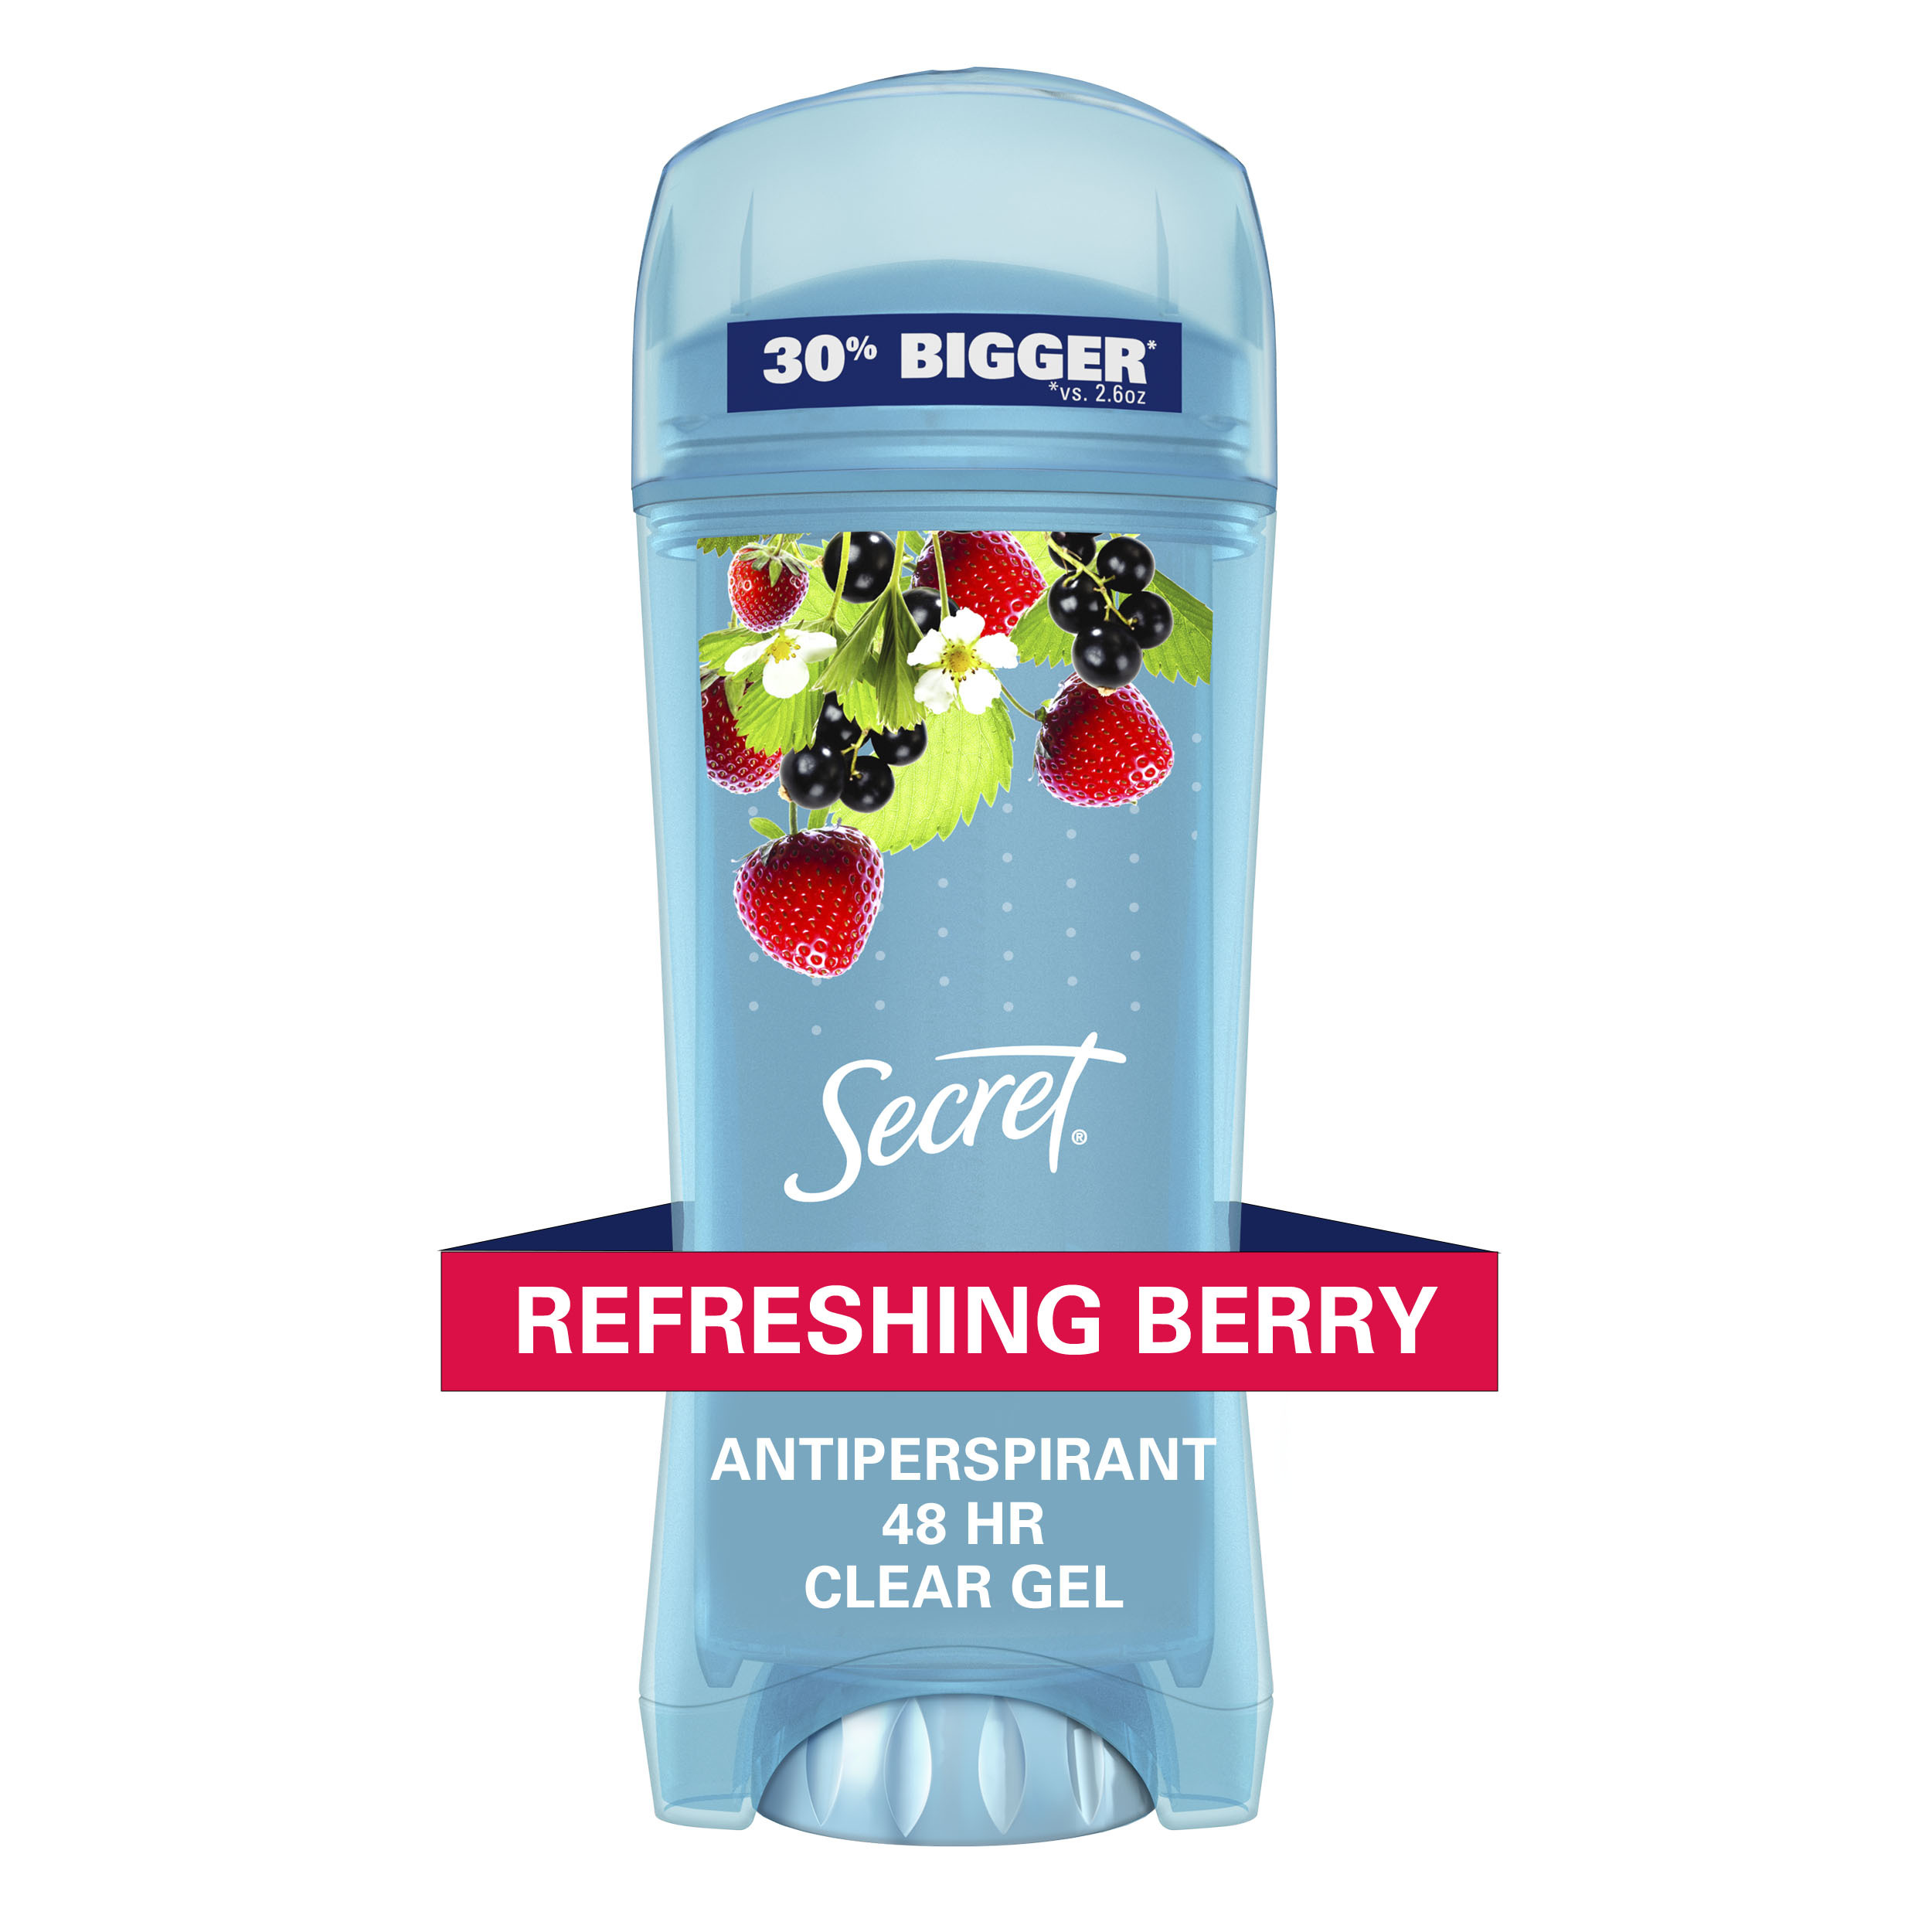 Secret Fresh Antiperspirant Deodorant Clear Gel, Berry, 3.4 oz - image 1 of 9